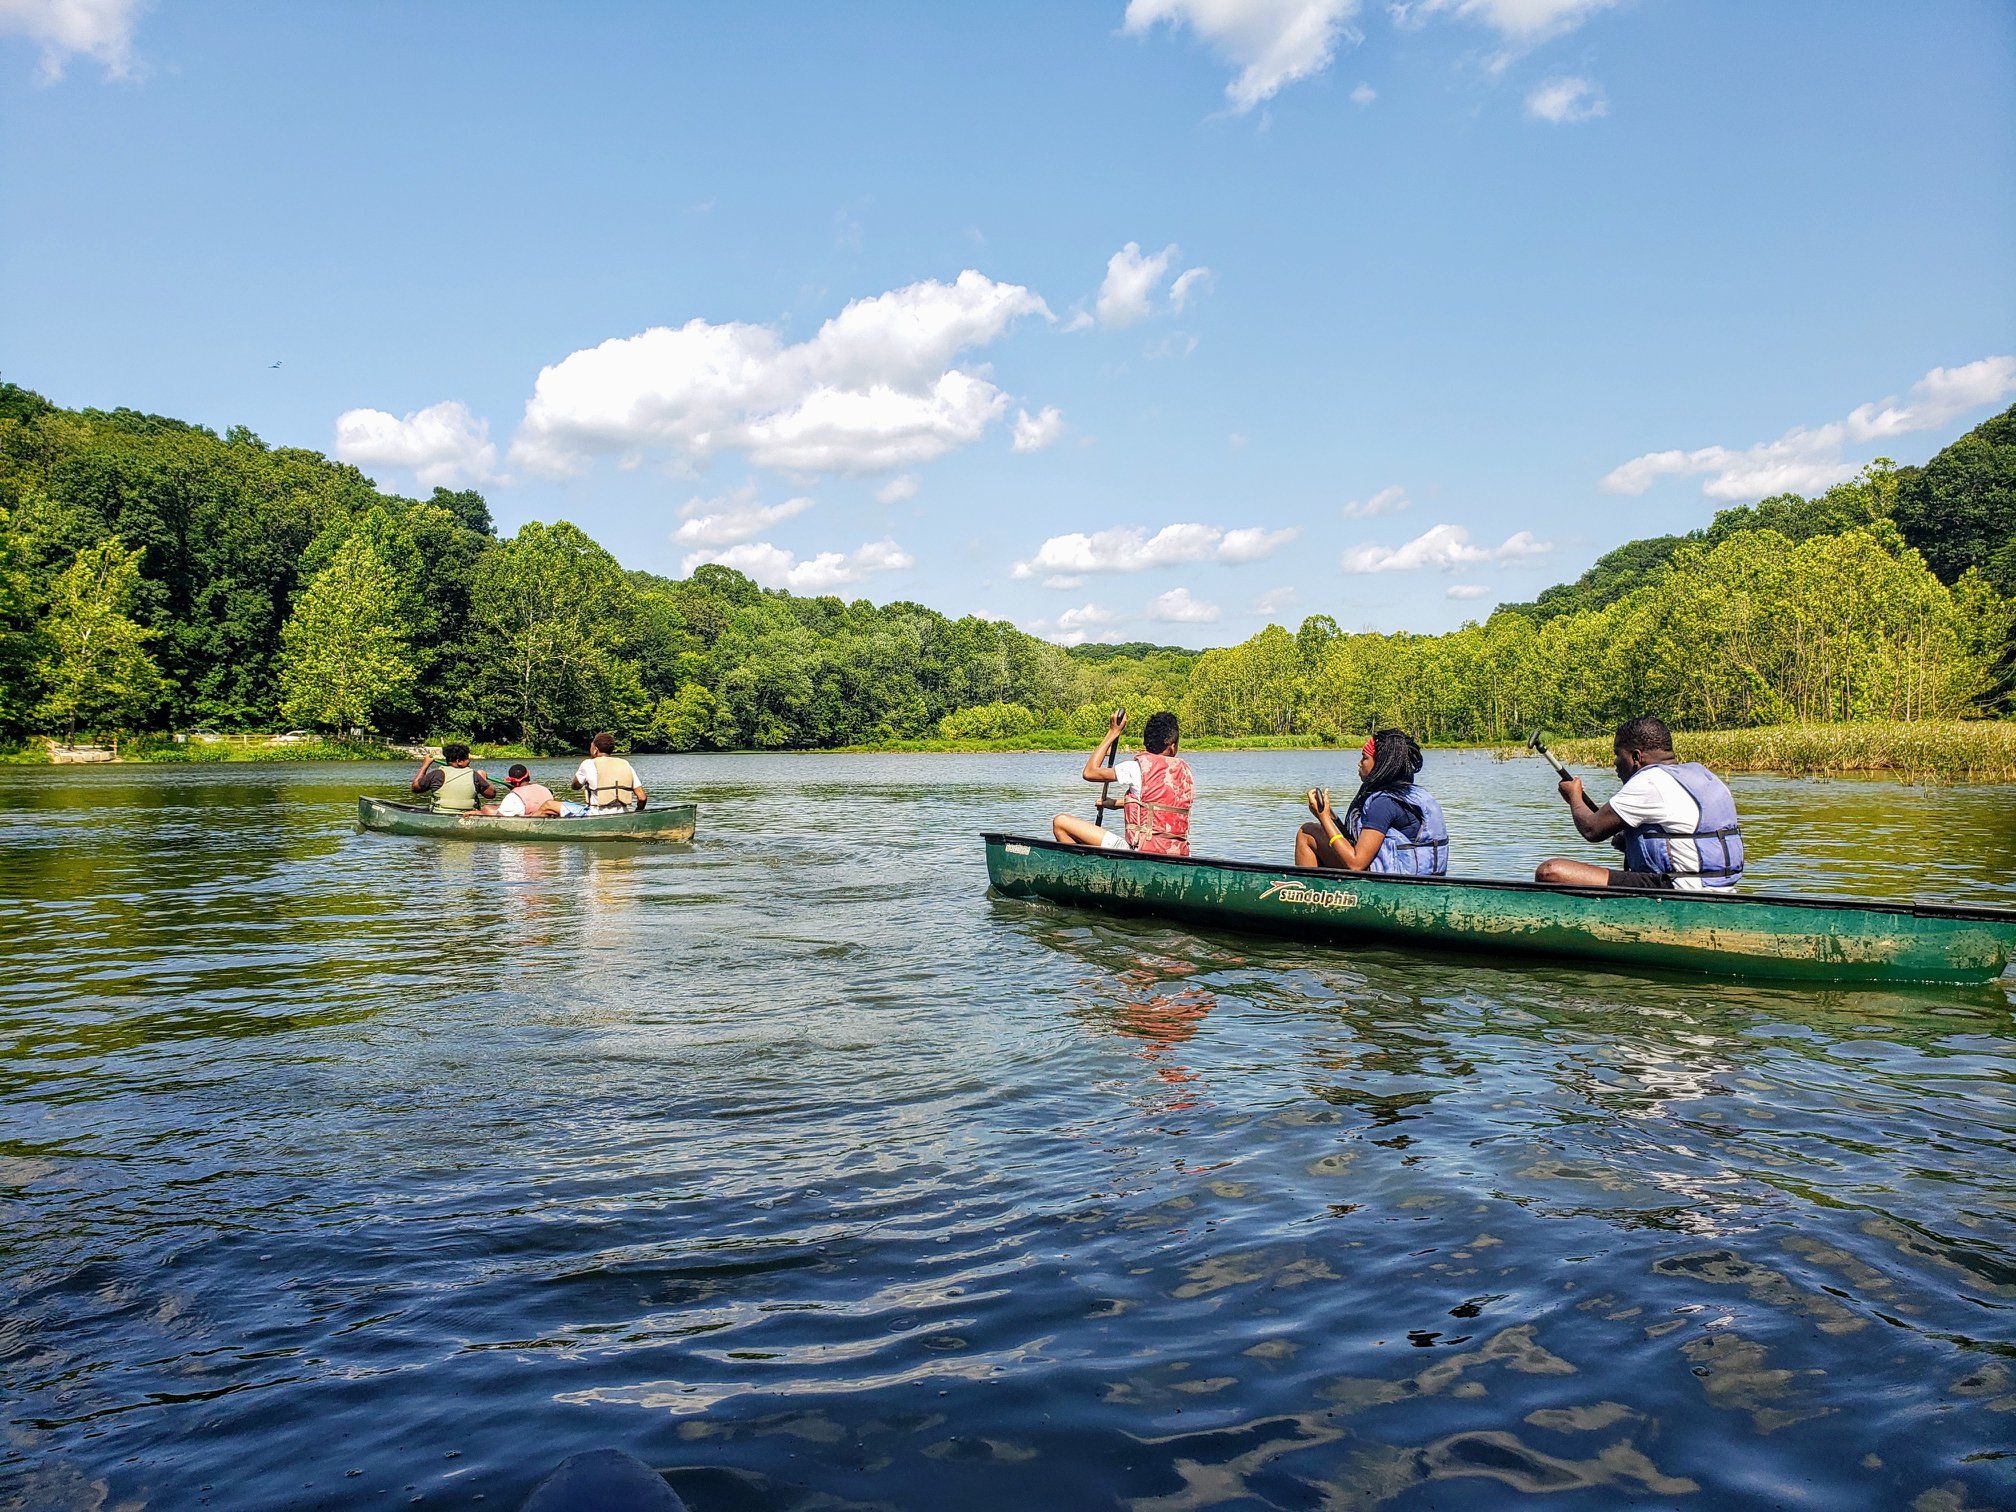 Park patrons enjoy paddling canoes on Griffy Lake.